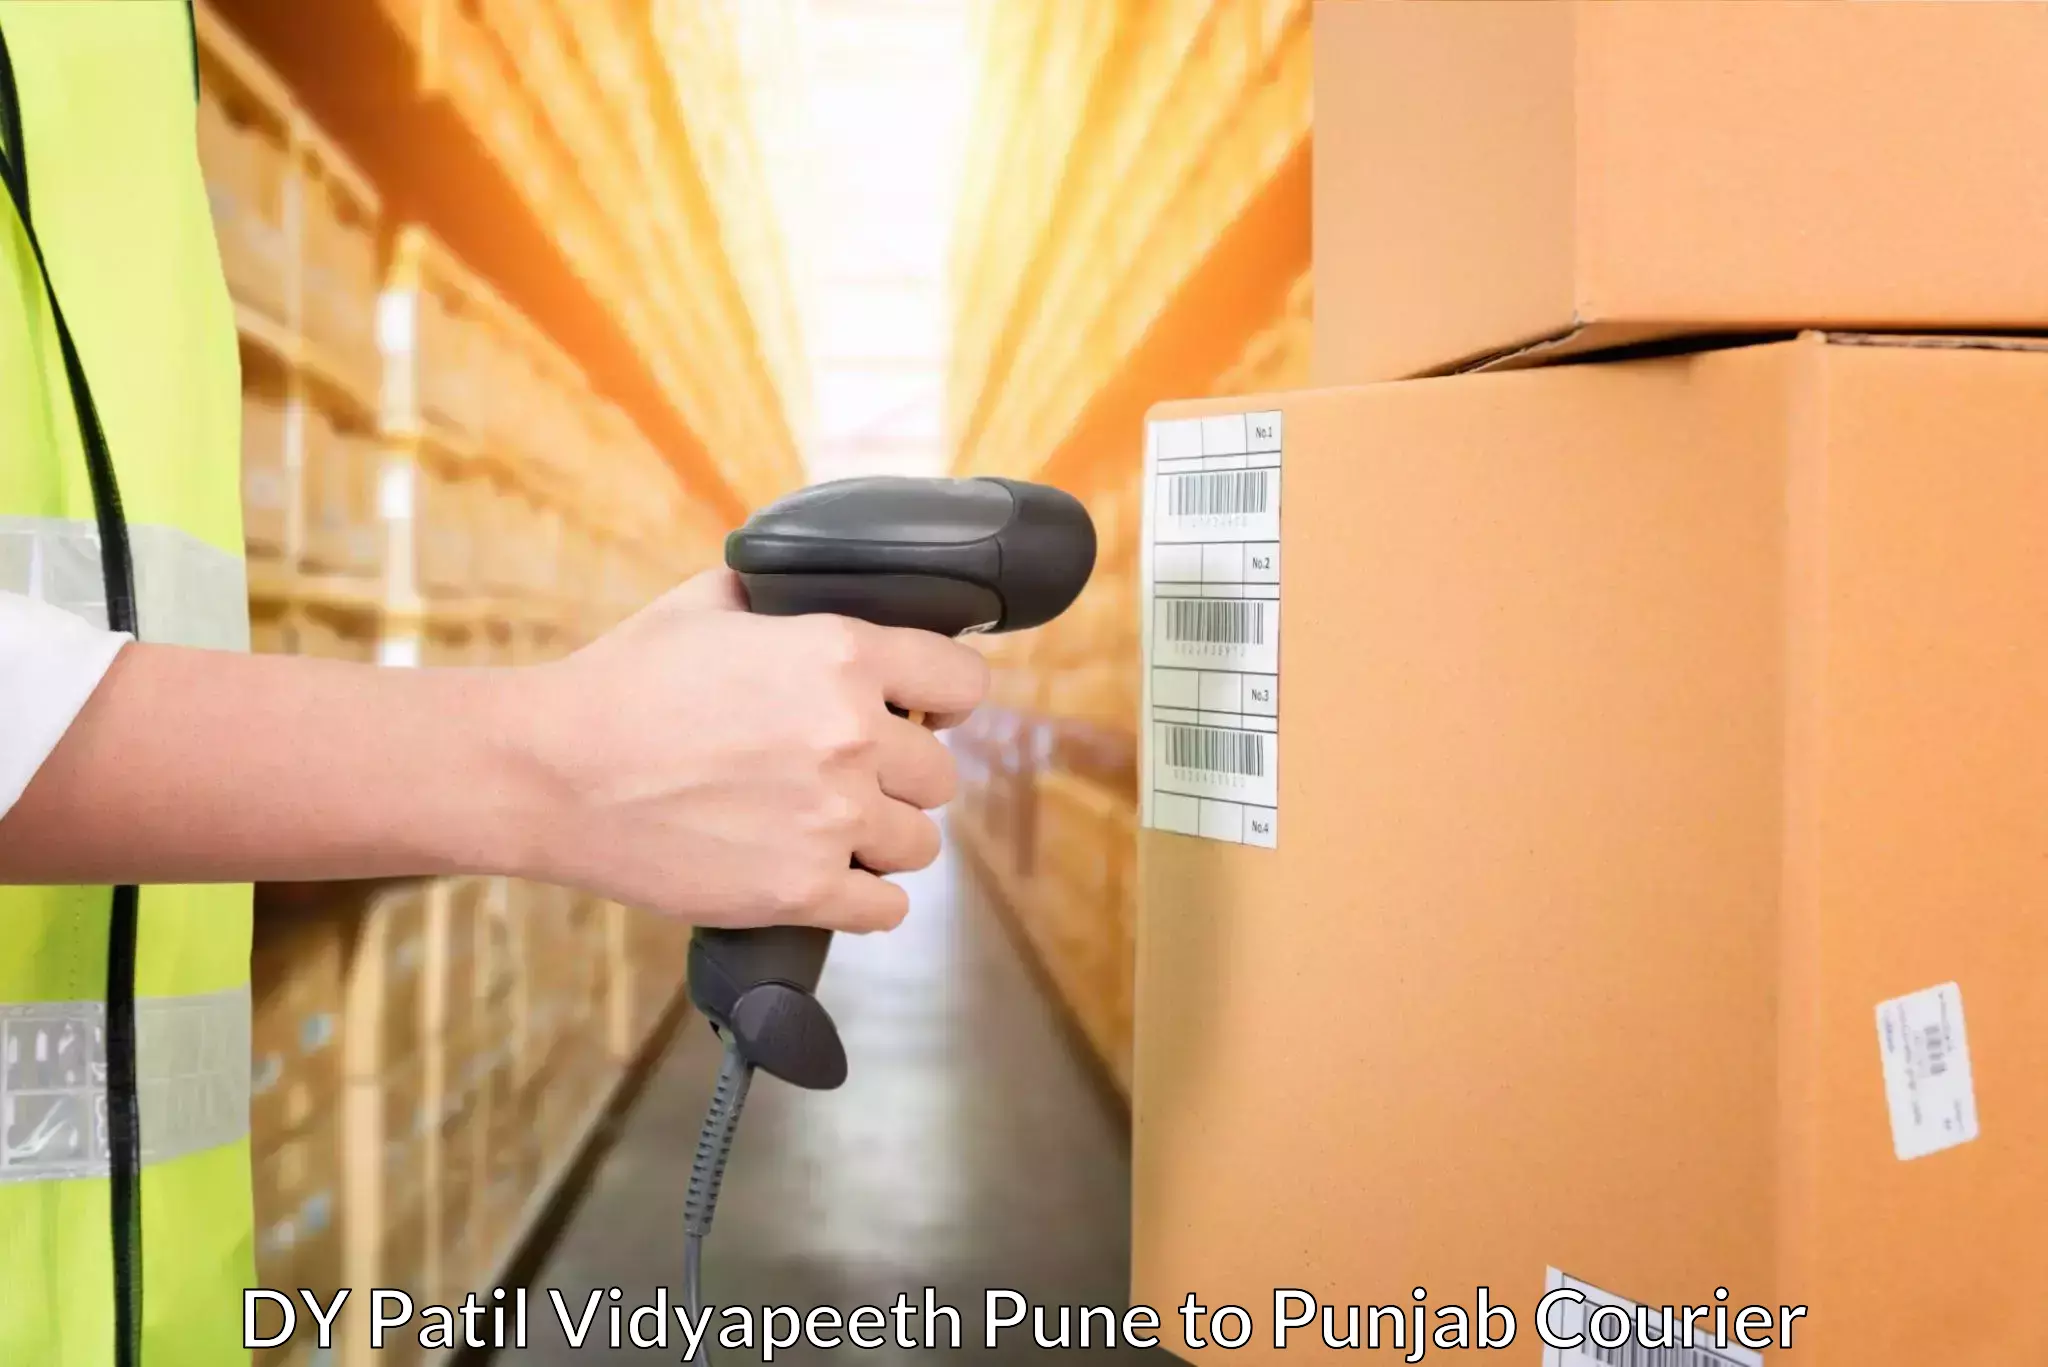 Express delivery network DY Patil Vidyapeeth Pune to Ajnala